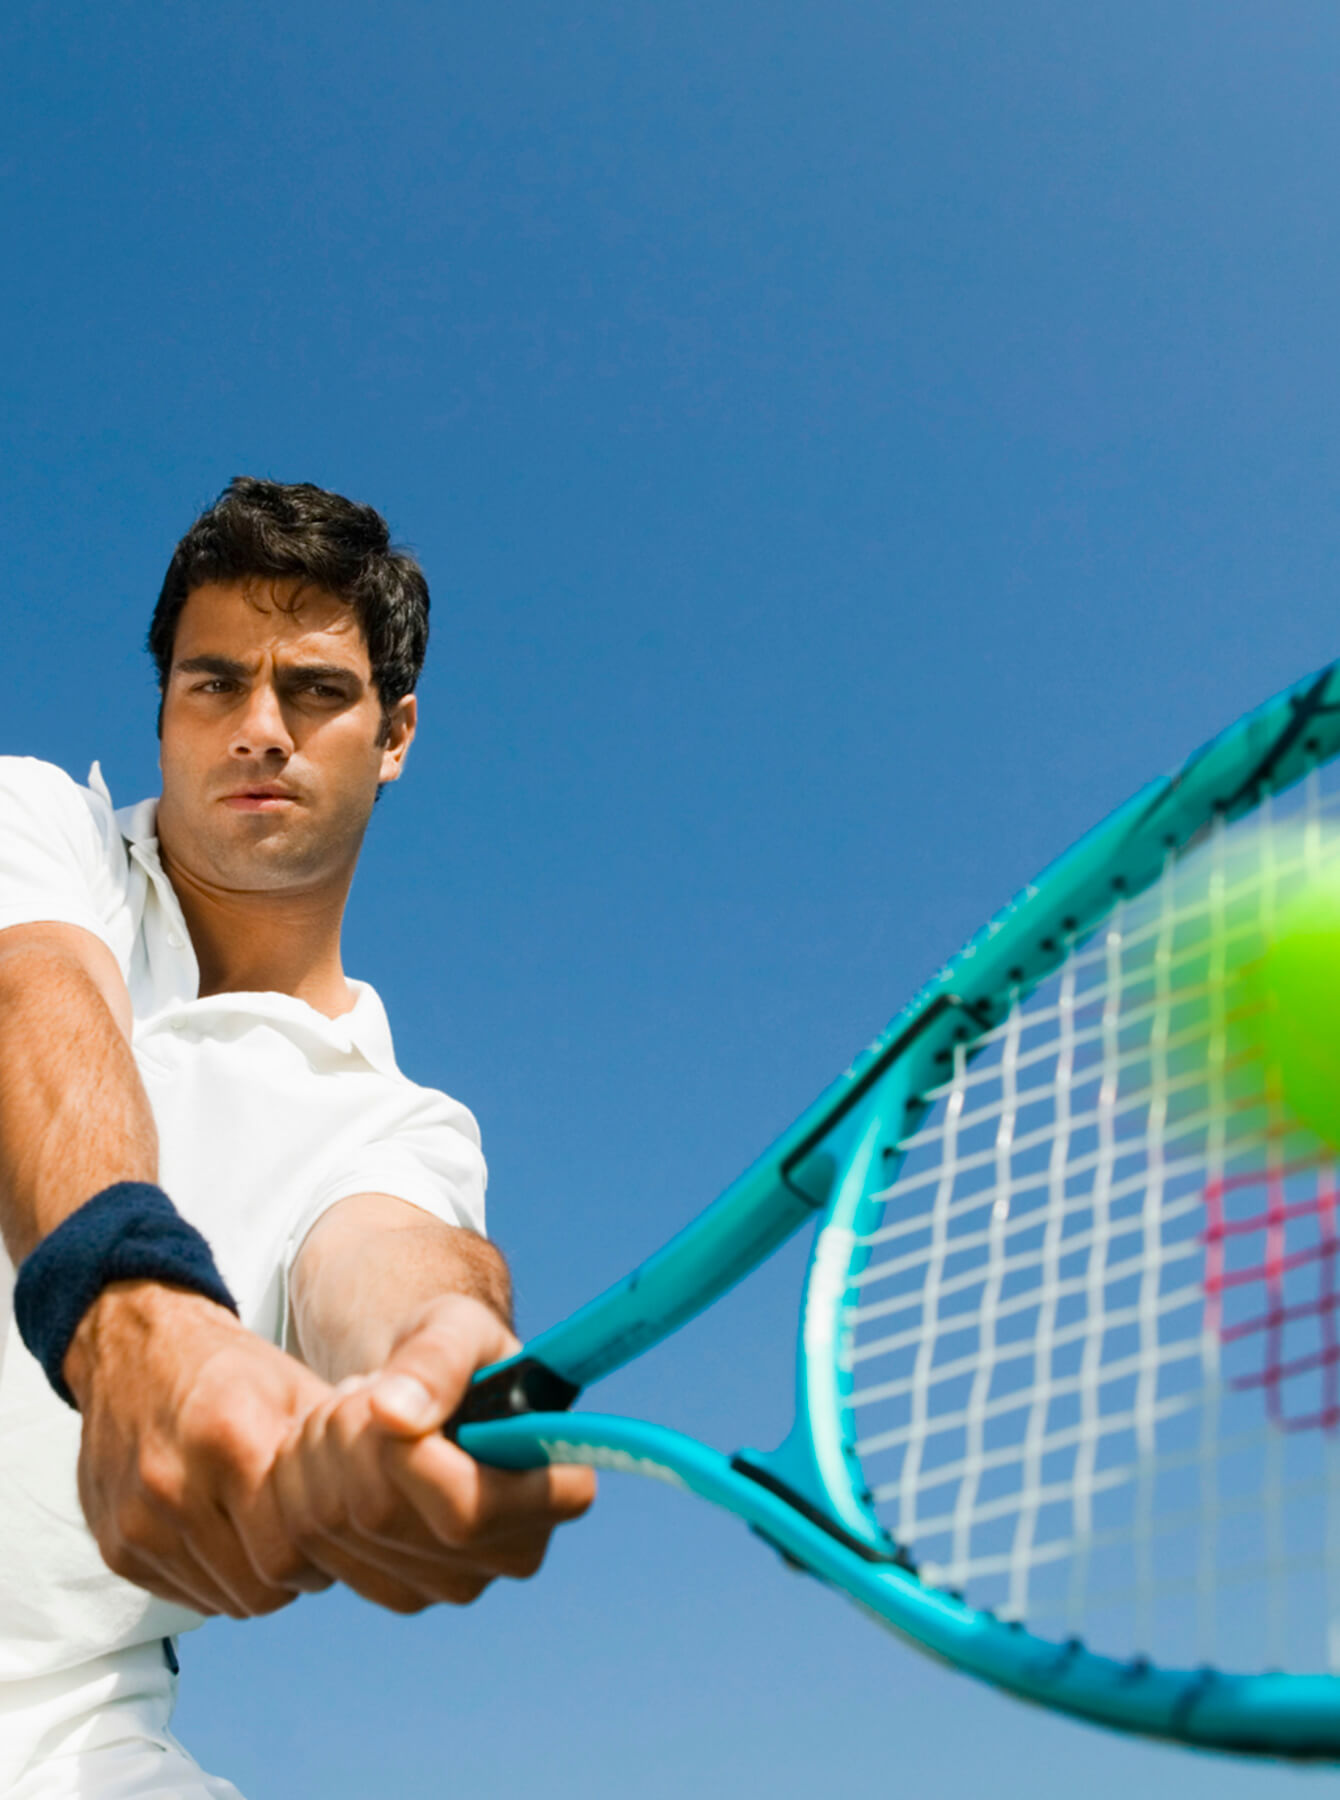 lezioni di tennis per adulti